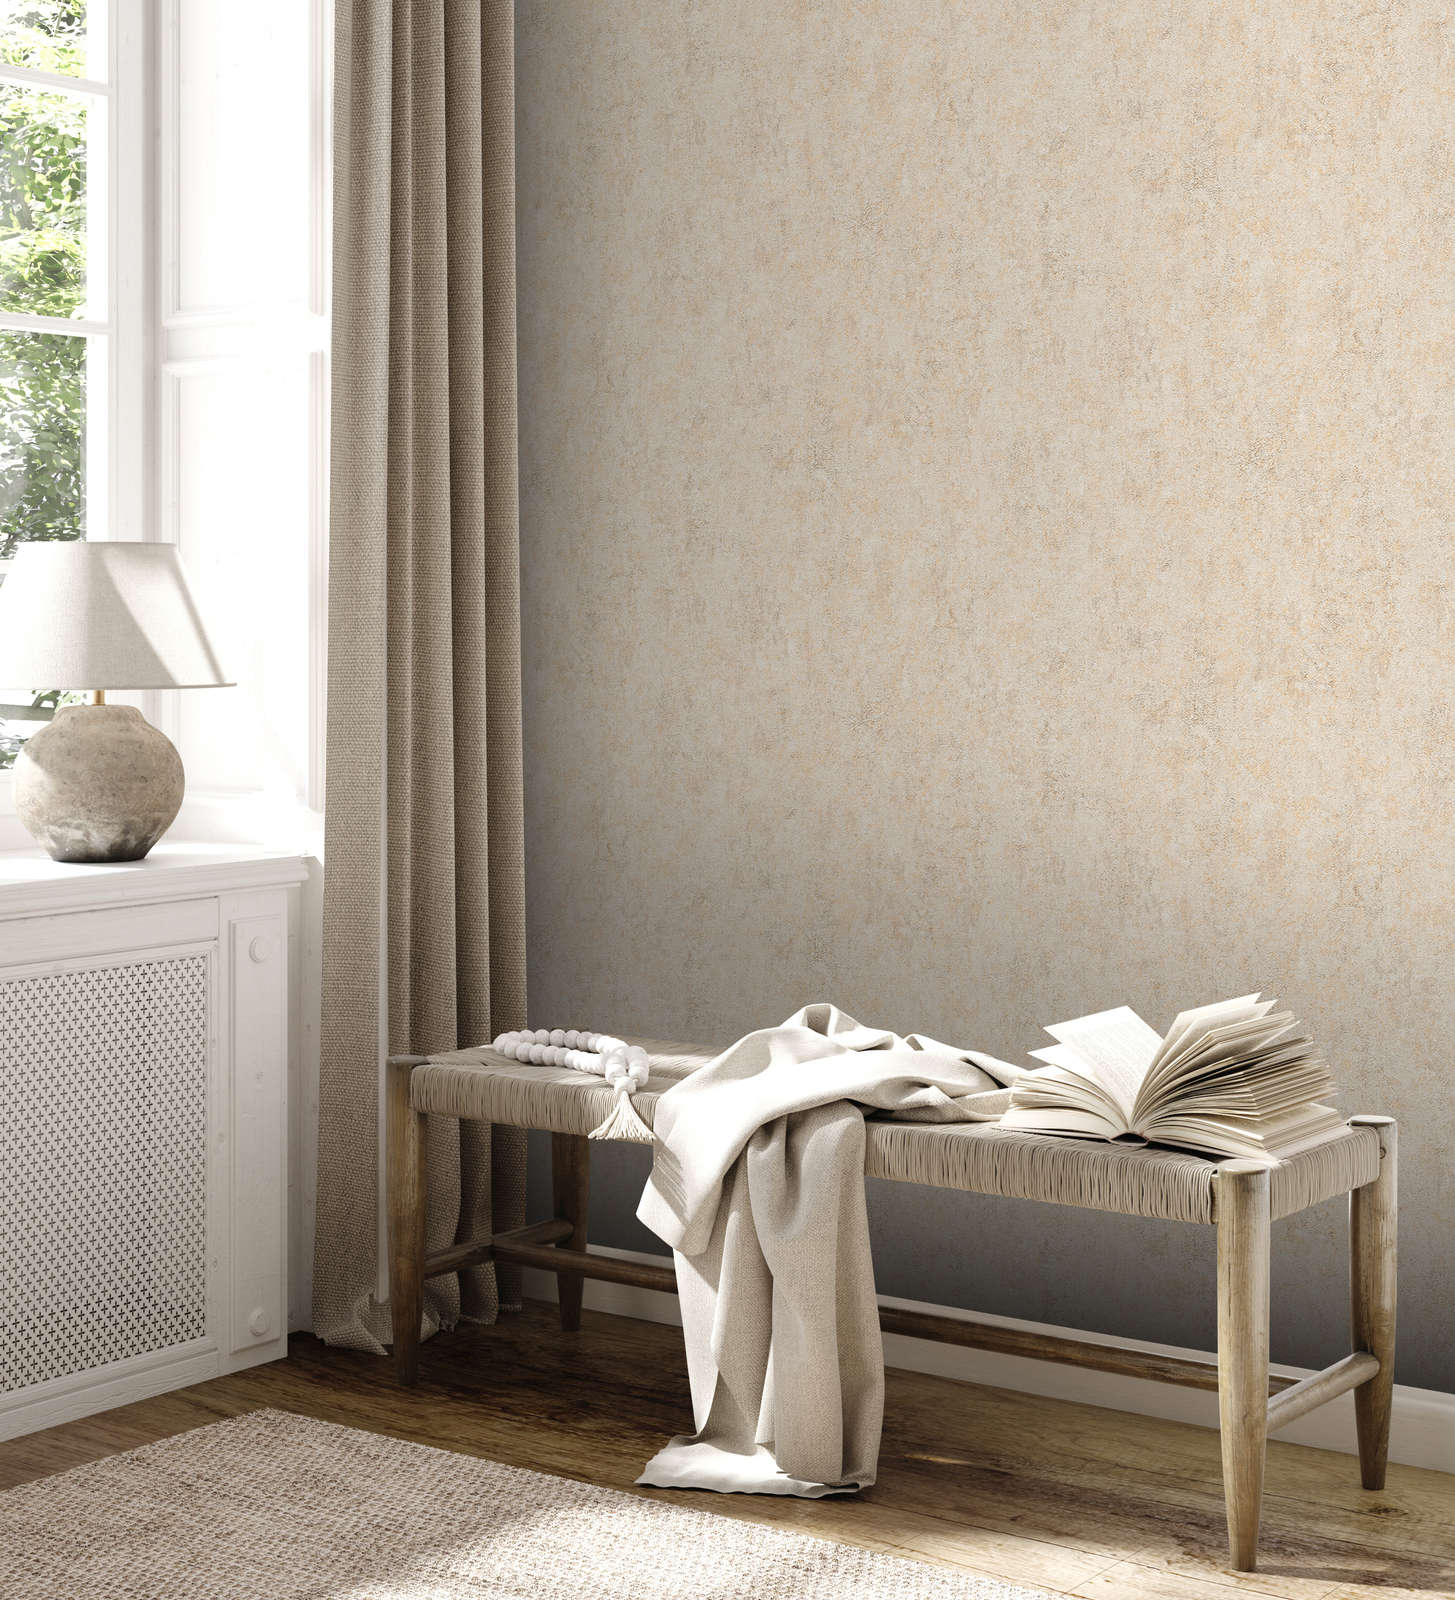             Plain metallic effect wallpaper glossy textured - cream
        